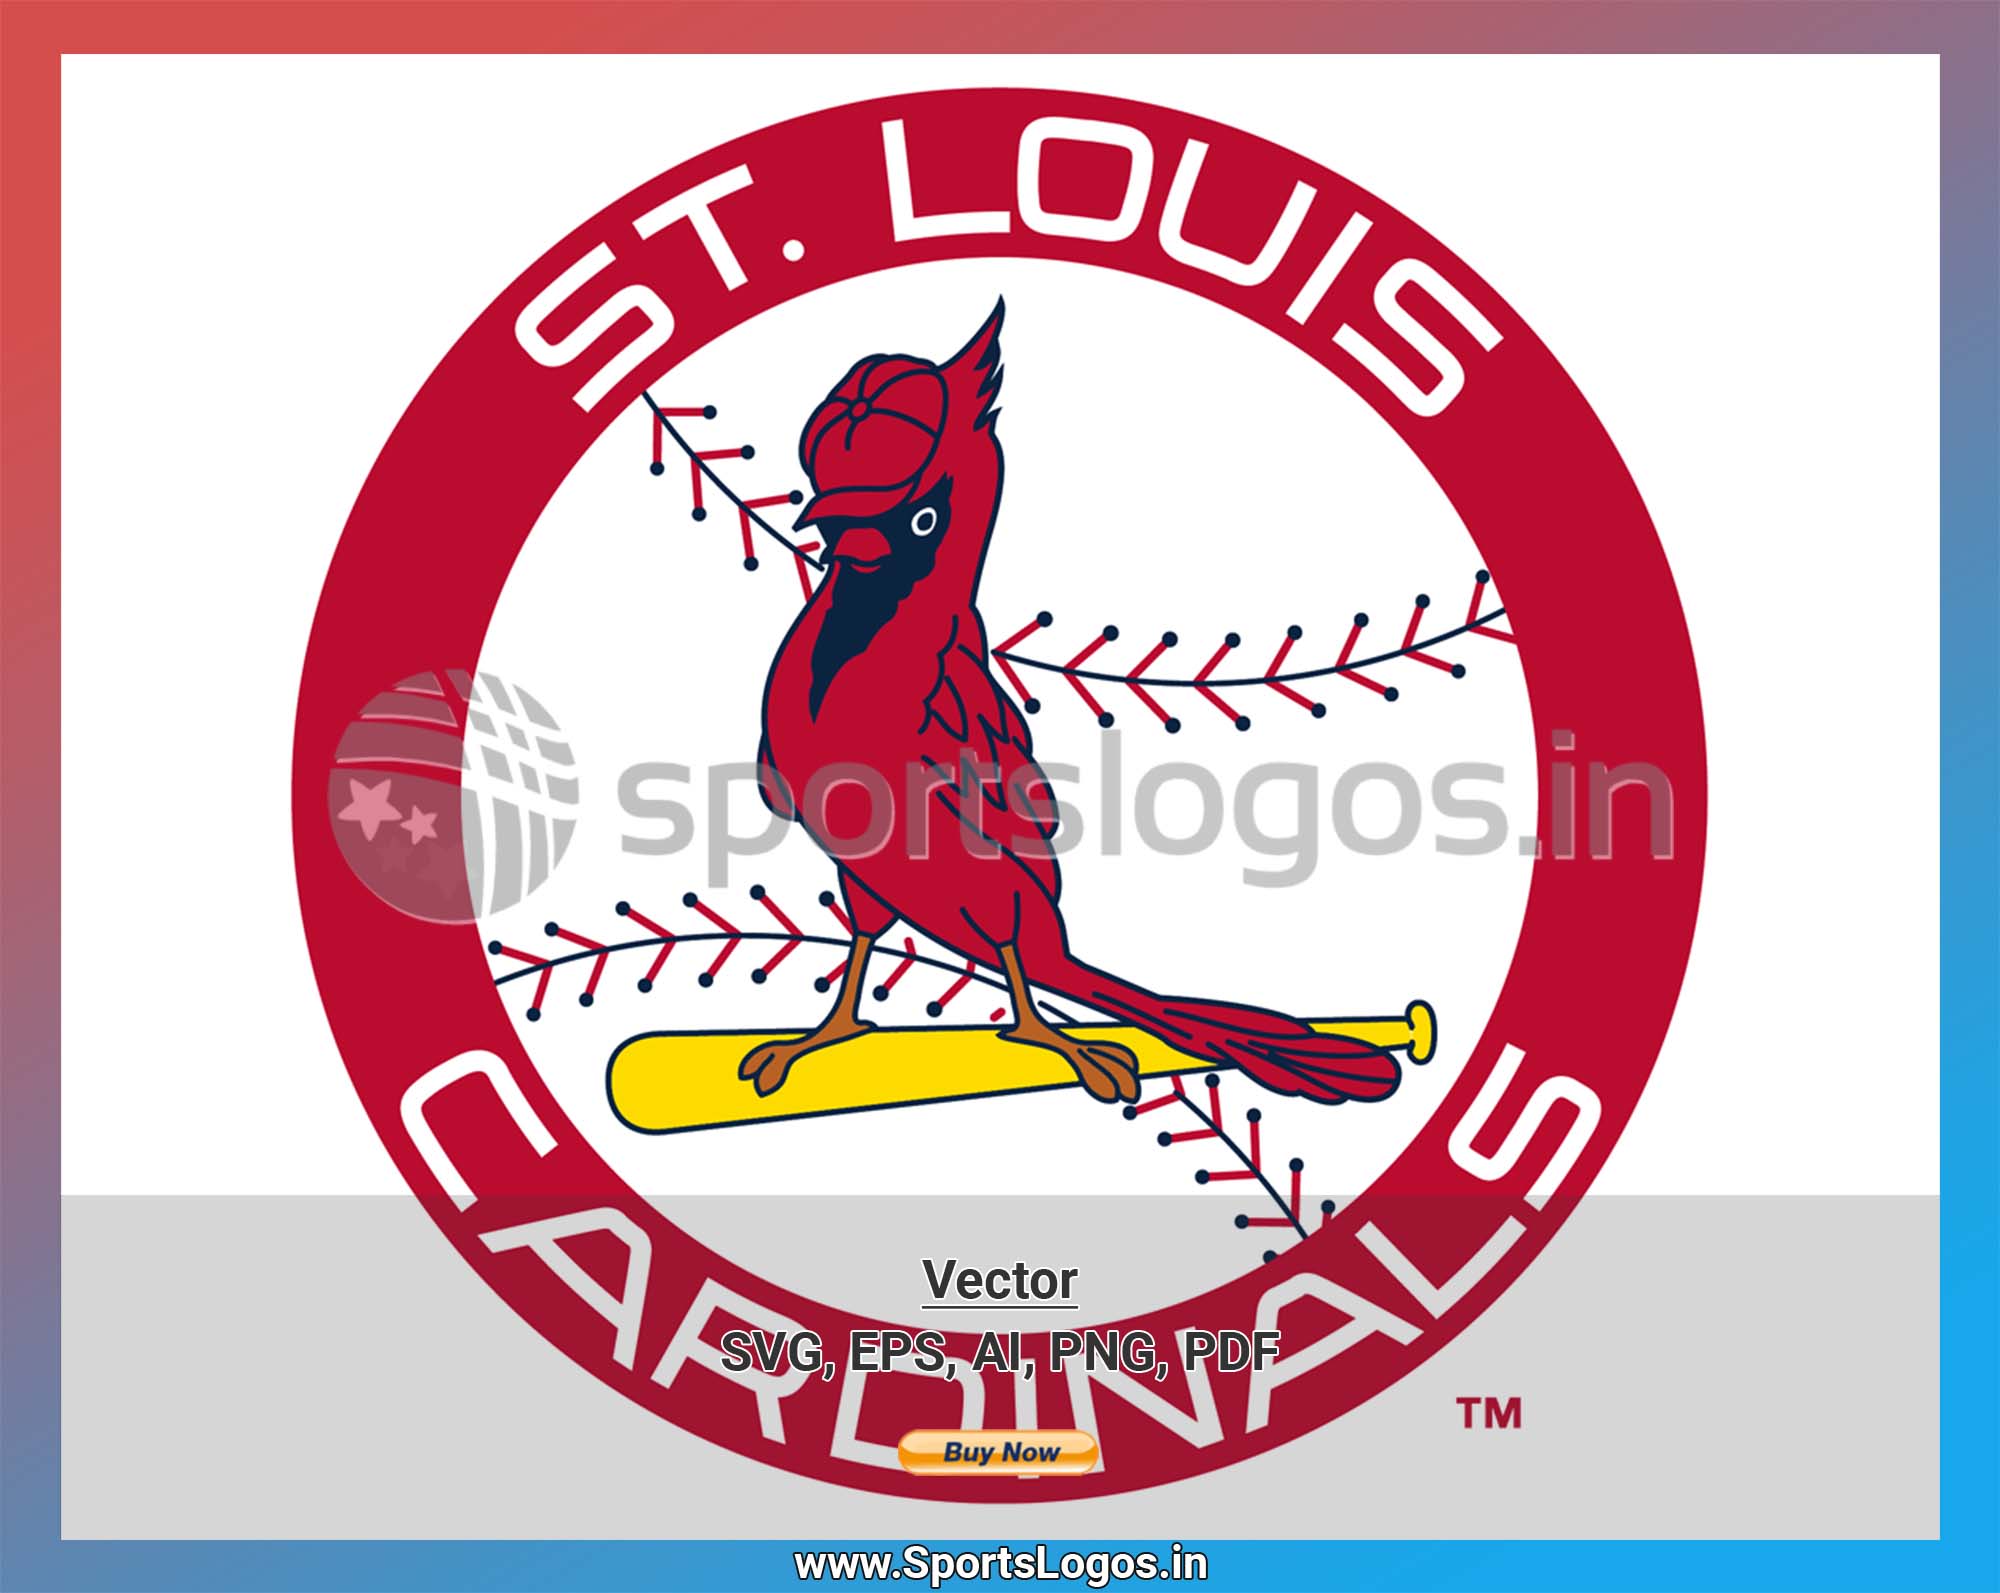 St. Louis Cardinals - Baseball Sports Vector SVG Logo in 5 formats